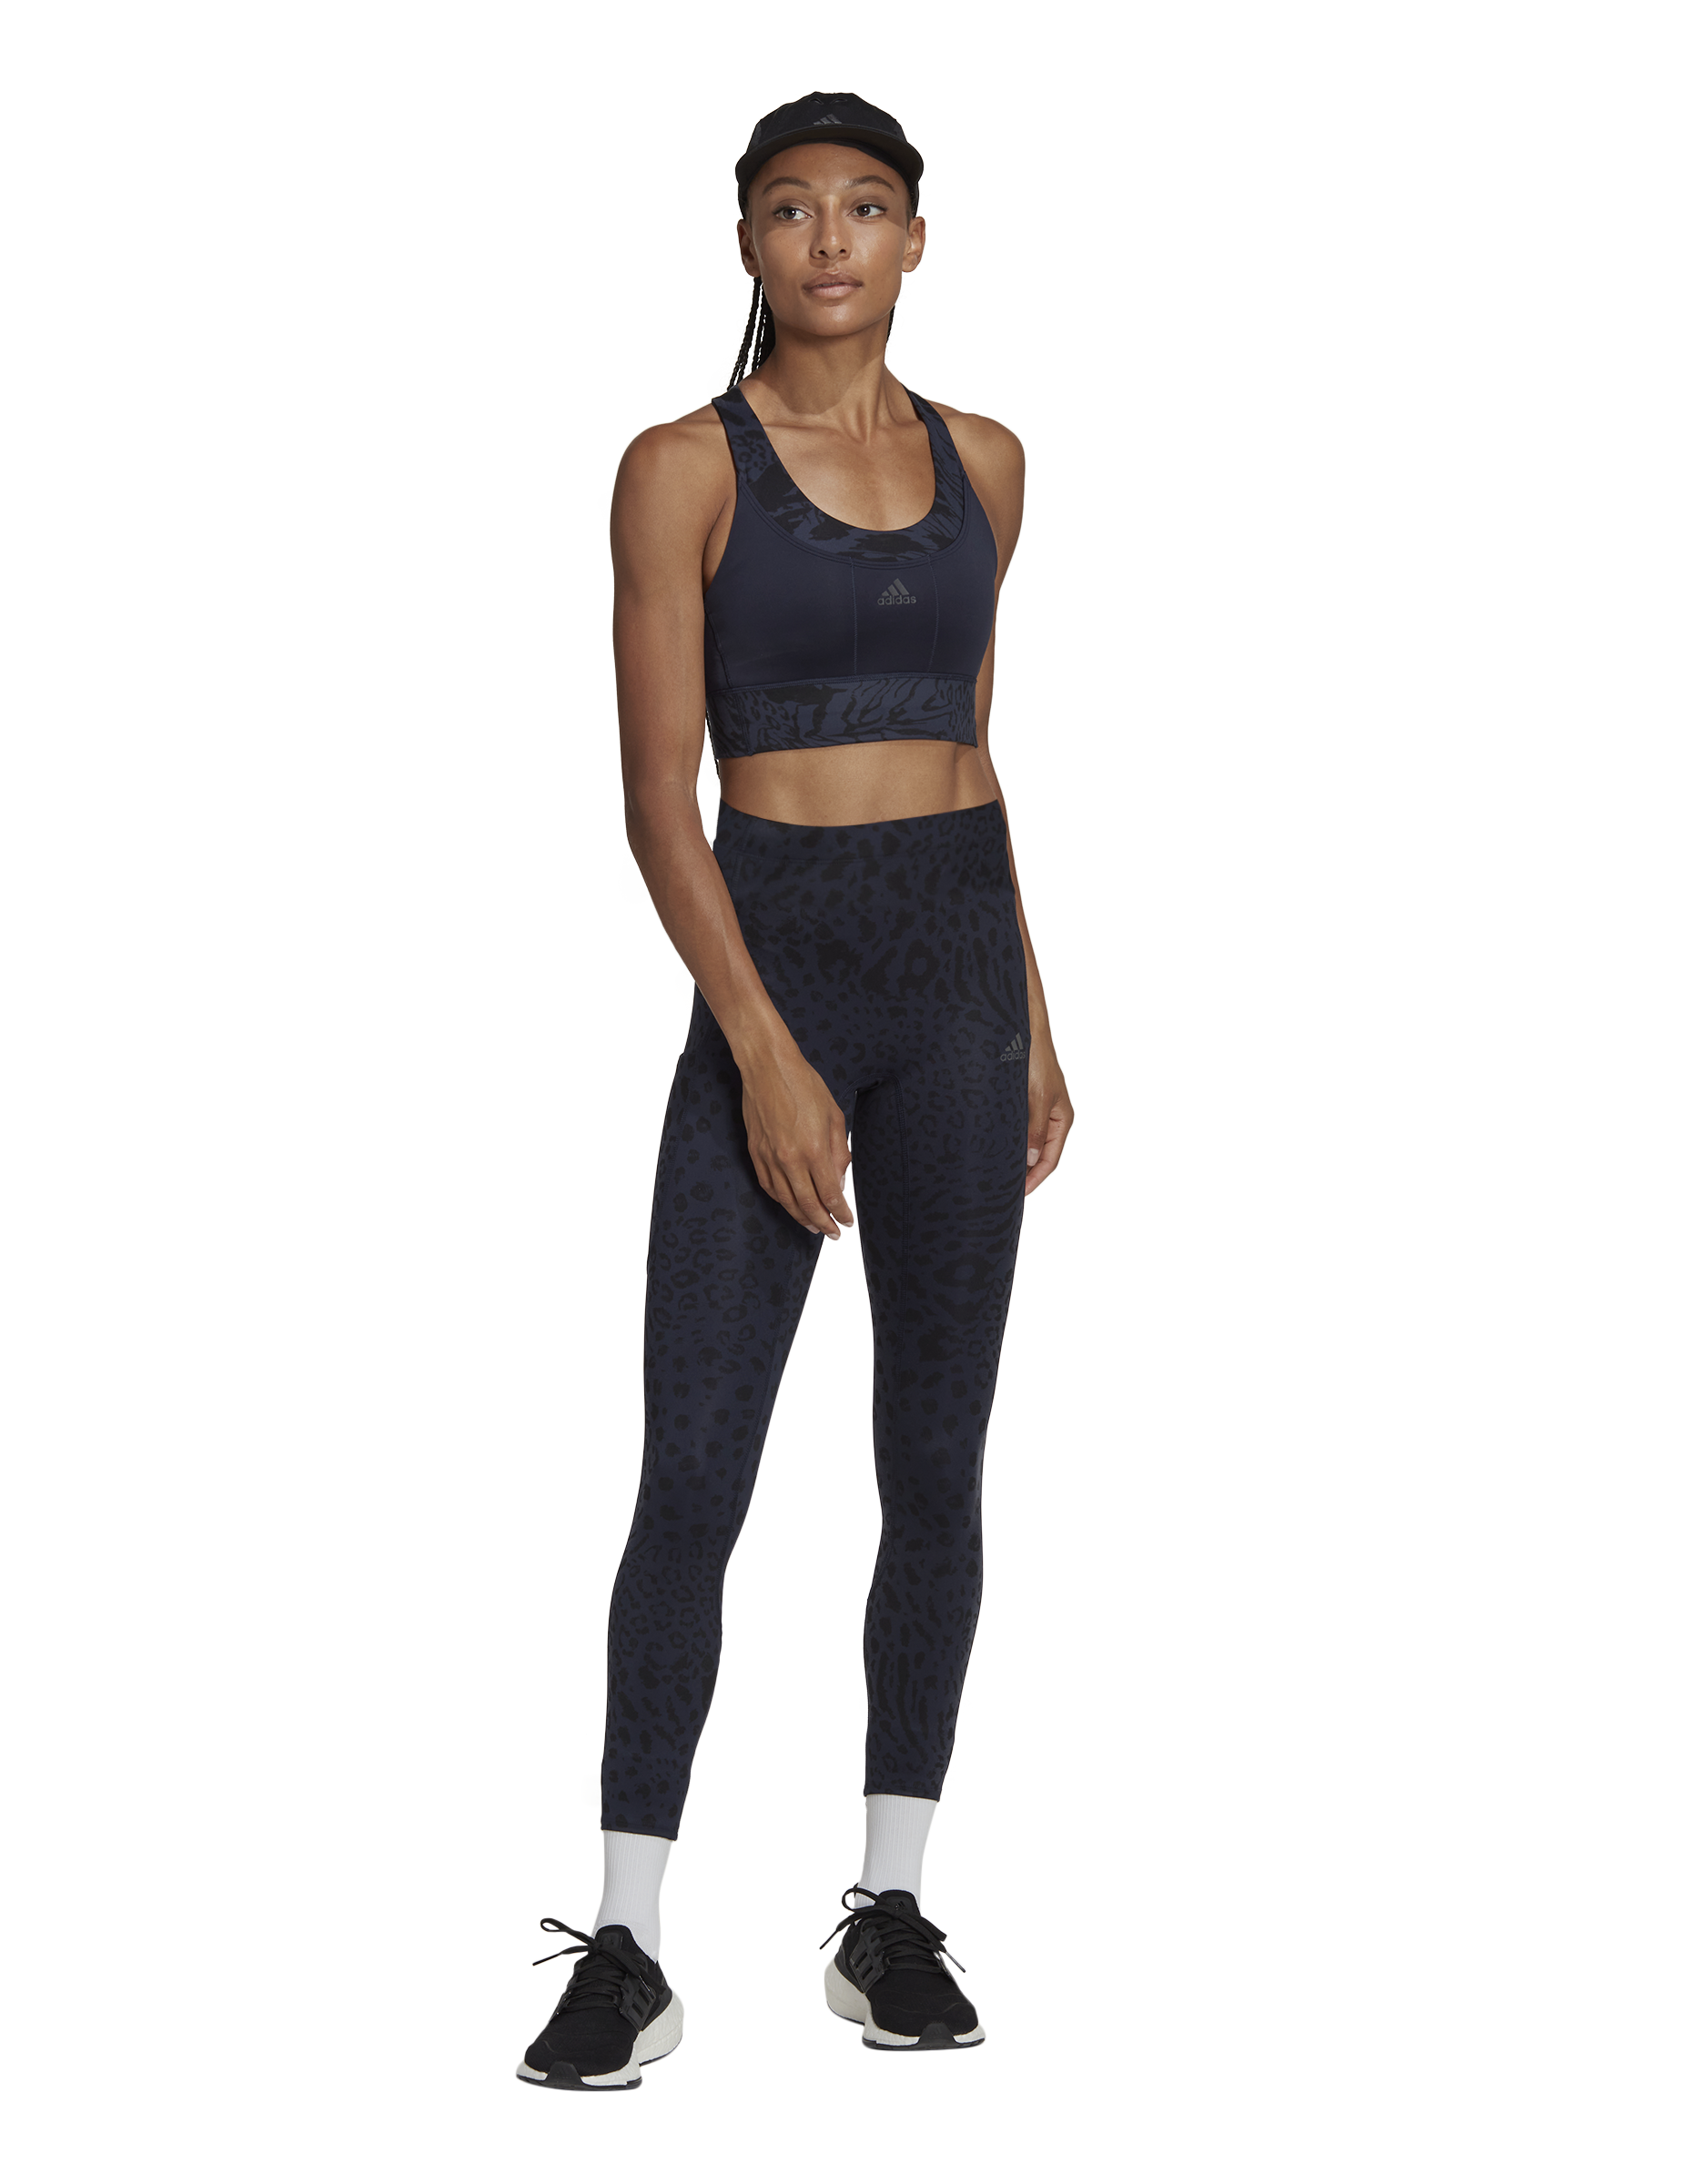 Active Wear Sets for Women -Workout Clothes Gym Wear TracksuitsYoga Jogging  Track Outfit Legging Vest 